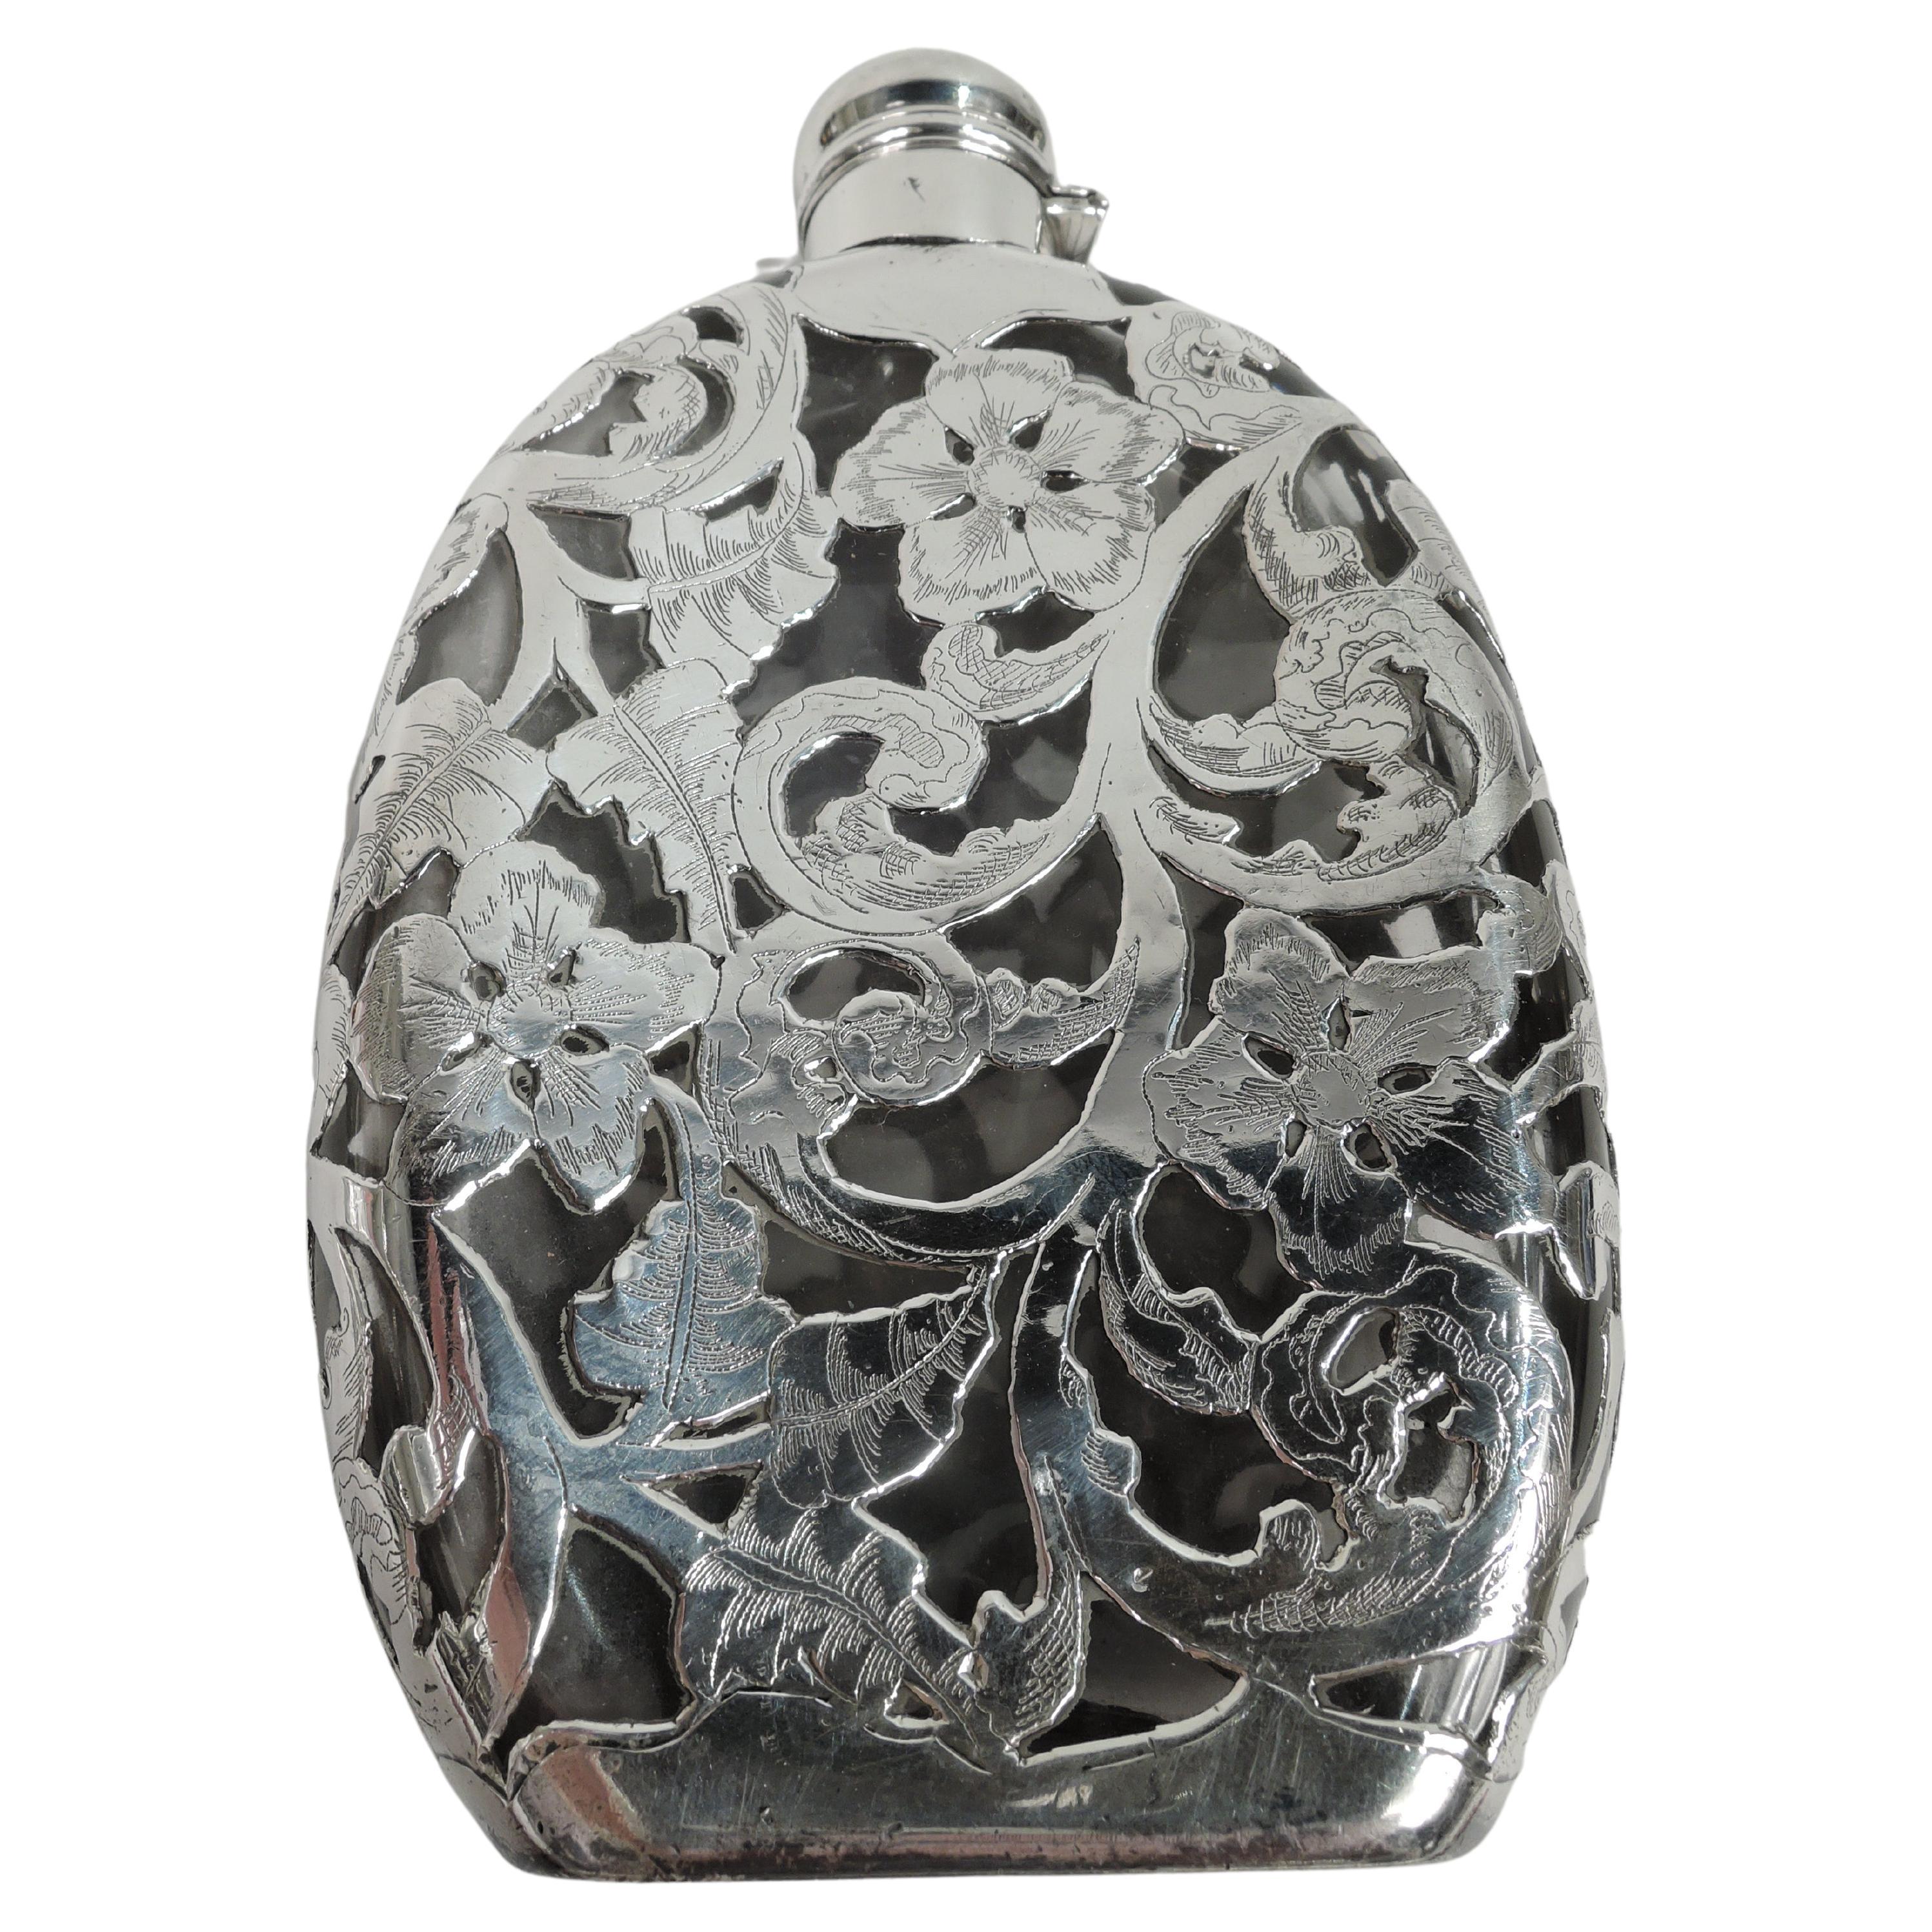 Antique American Art Nouveau Silver Overlay Flask For Sale